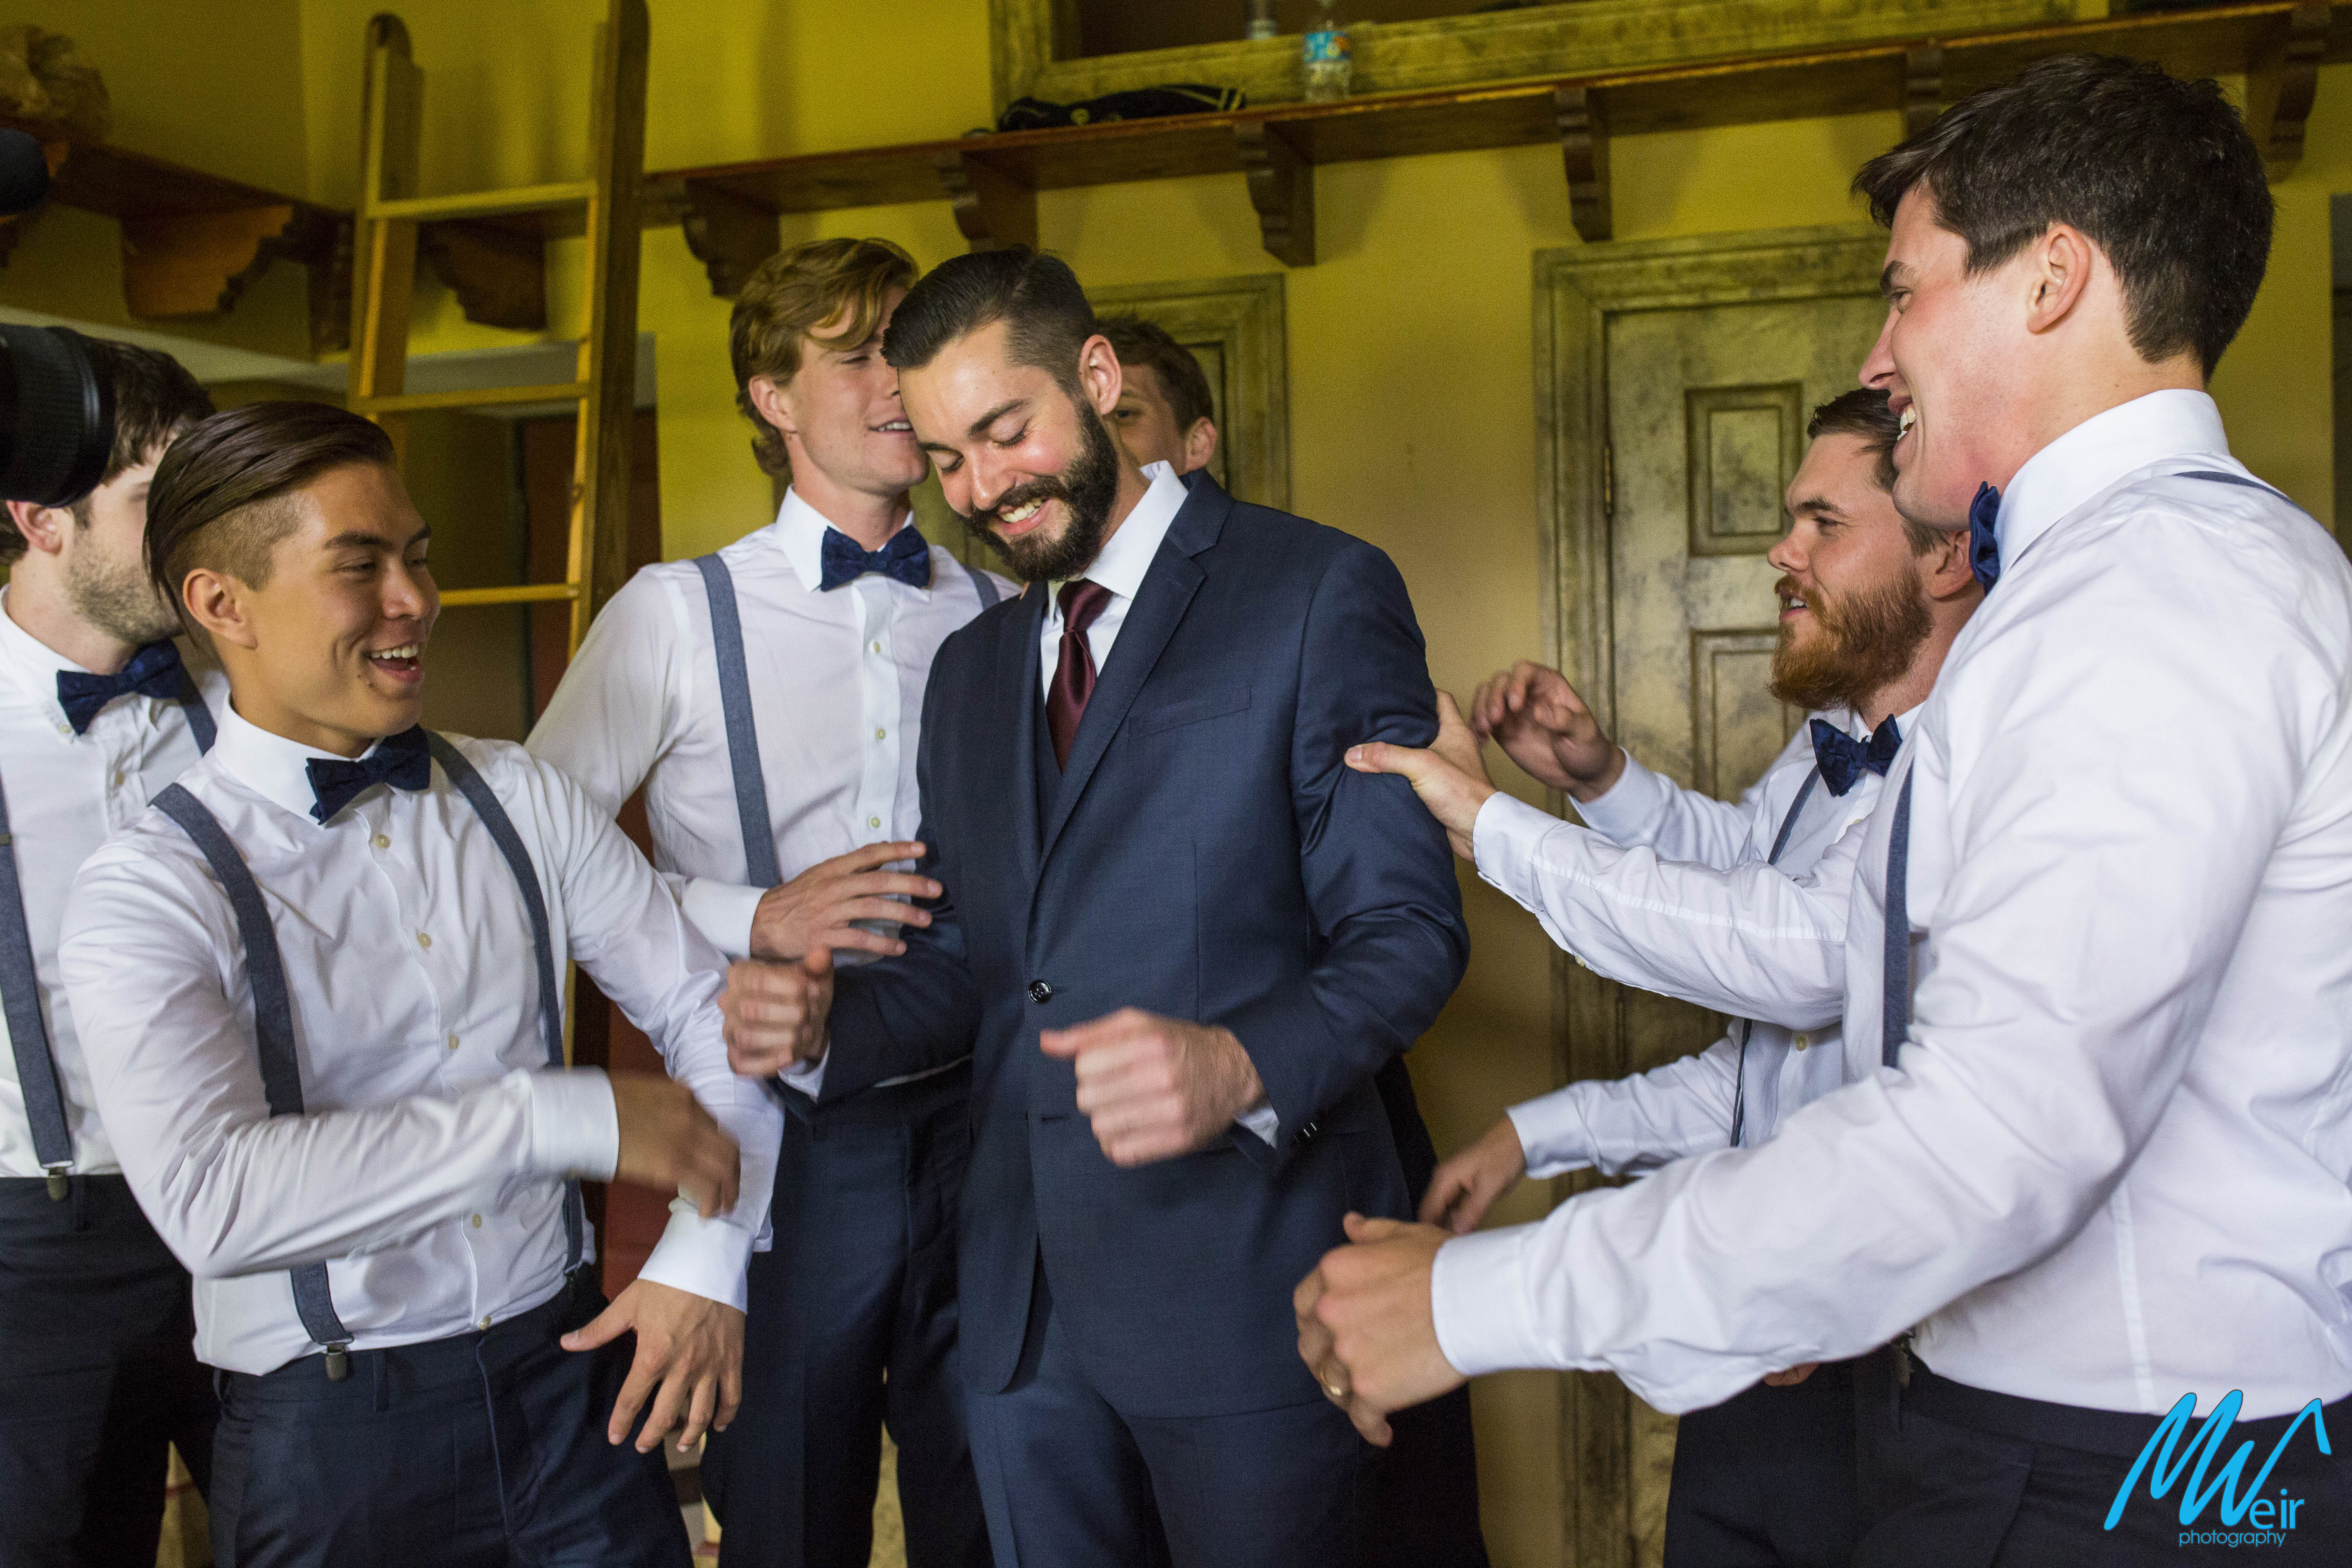 groomsmen joke around with groom before wedding ceremony